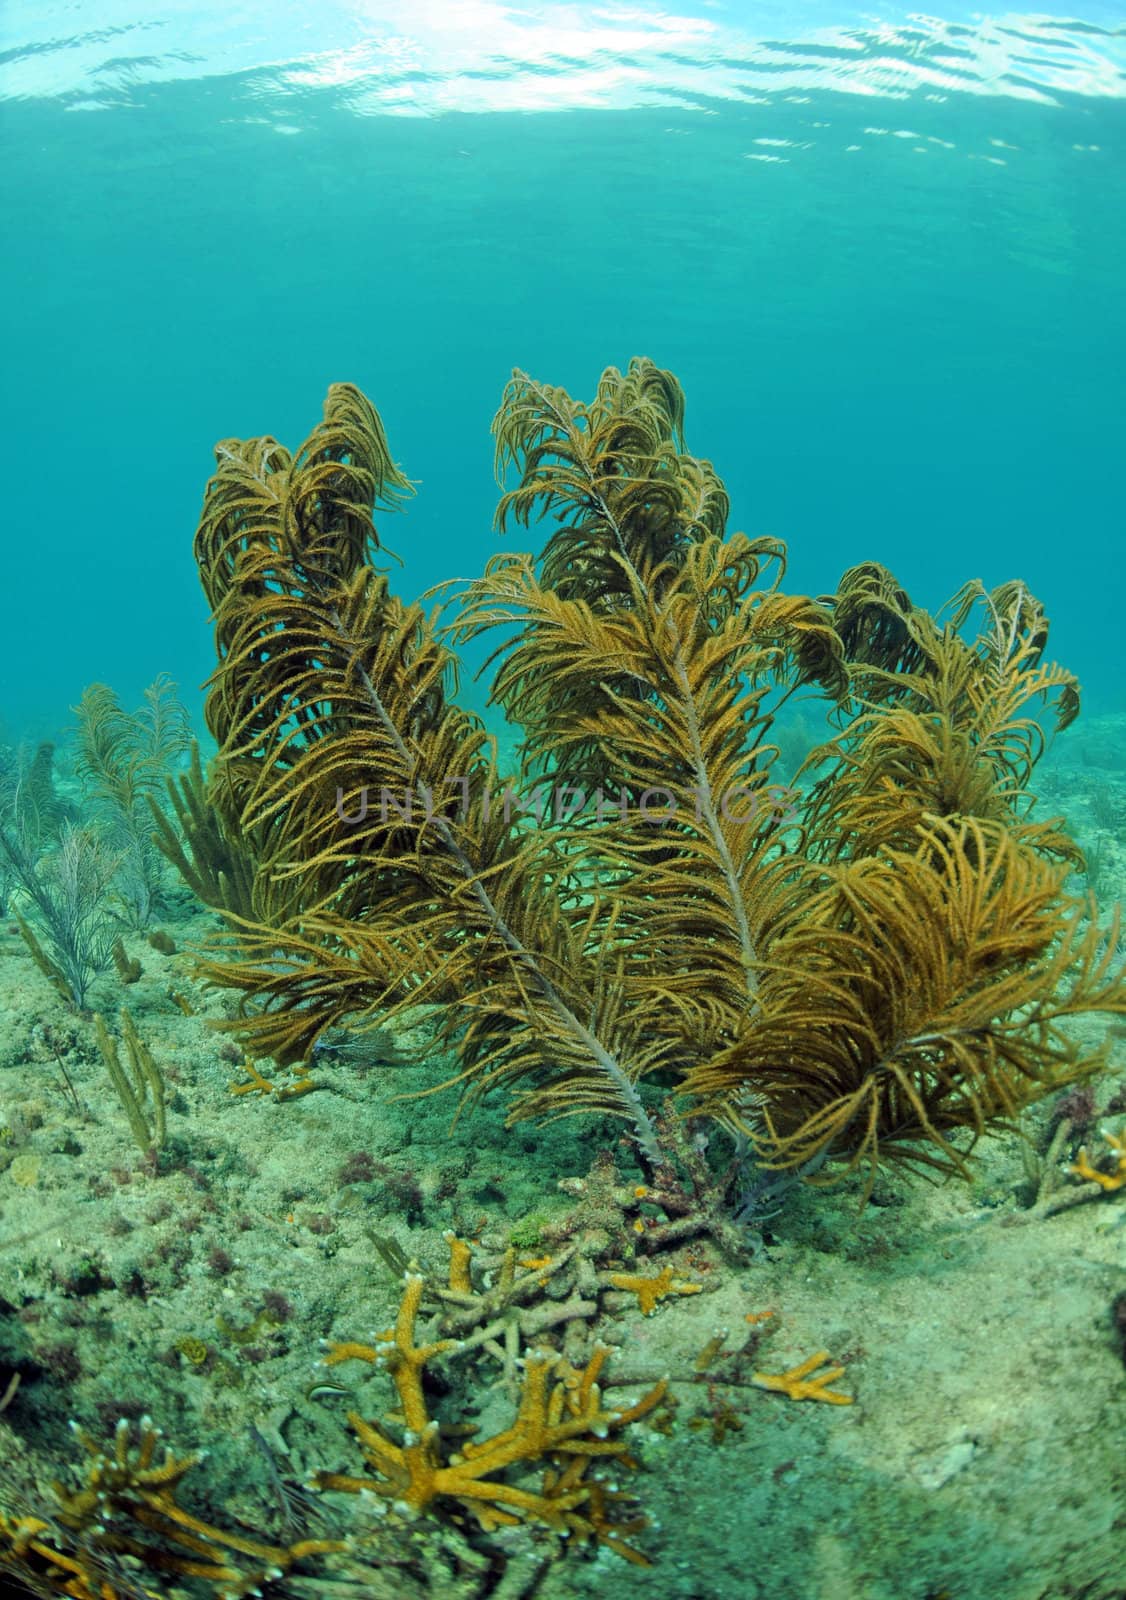 Coral reef in Atlantic Ocean with marine life